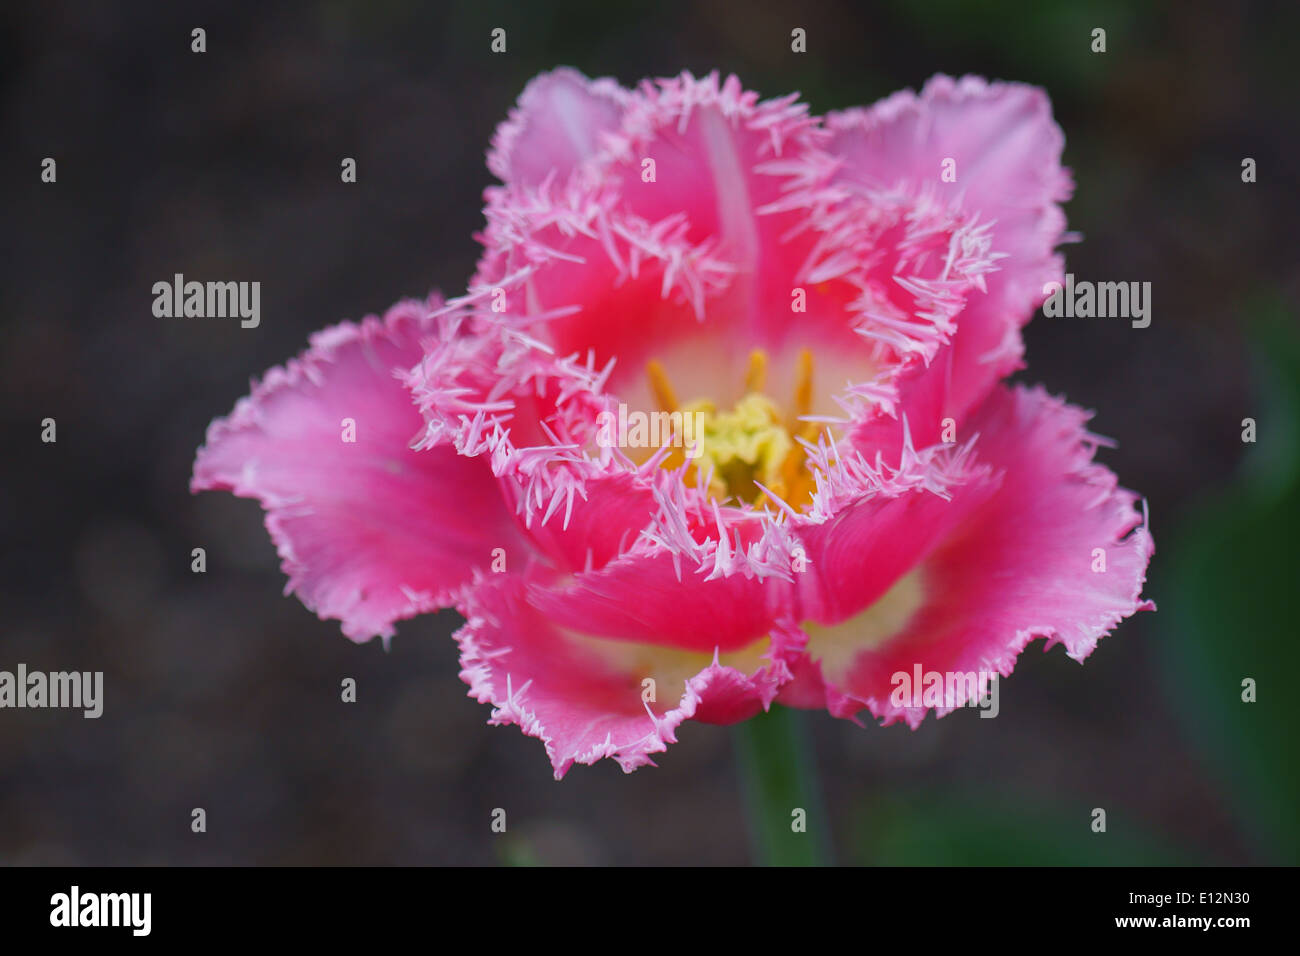 Pink tulip with jagged petal rims close up Stock Photo